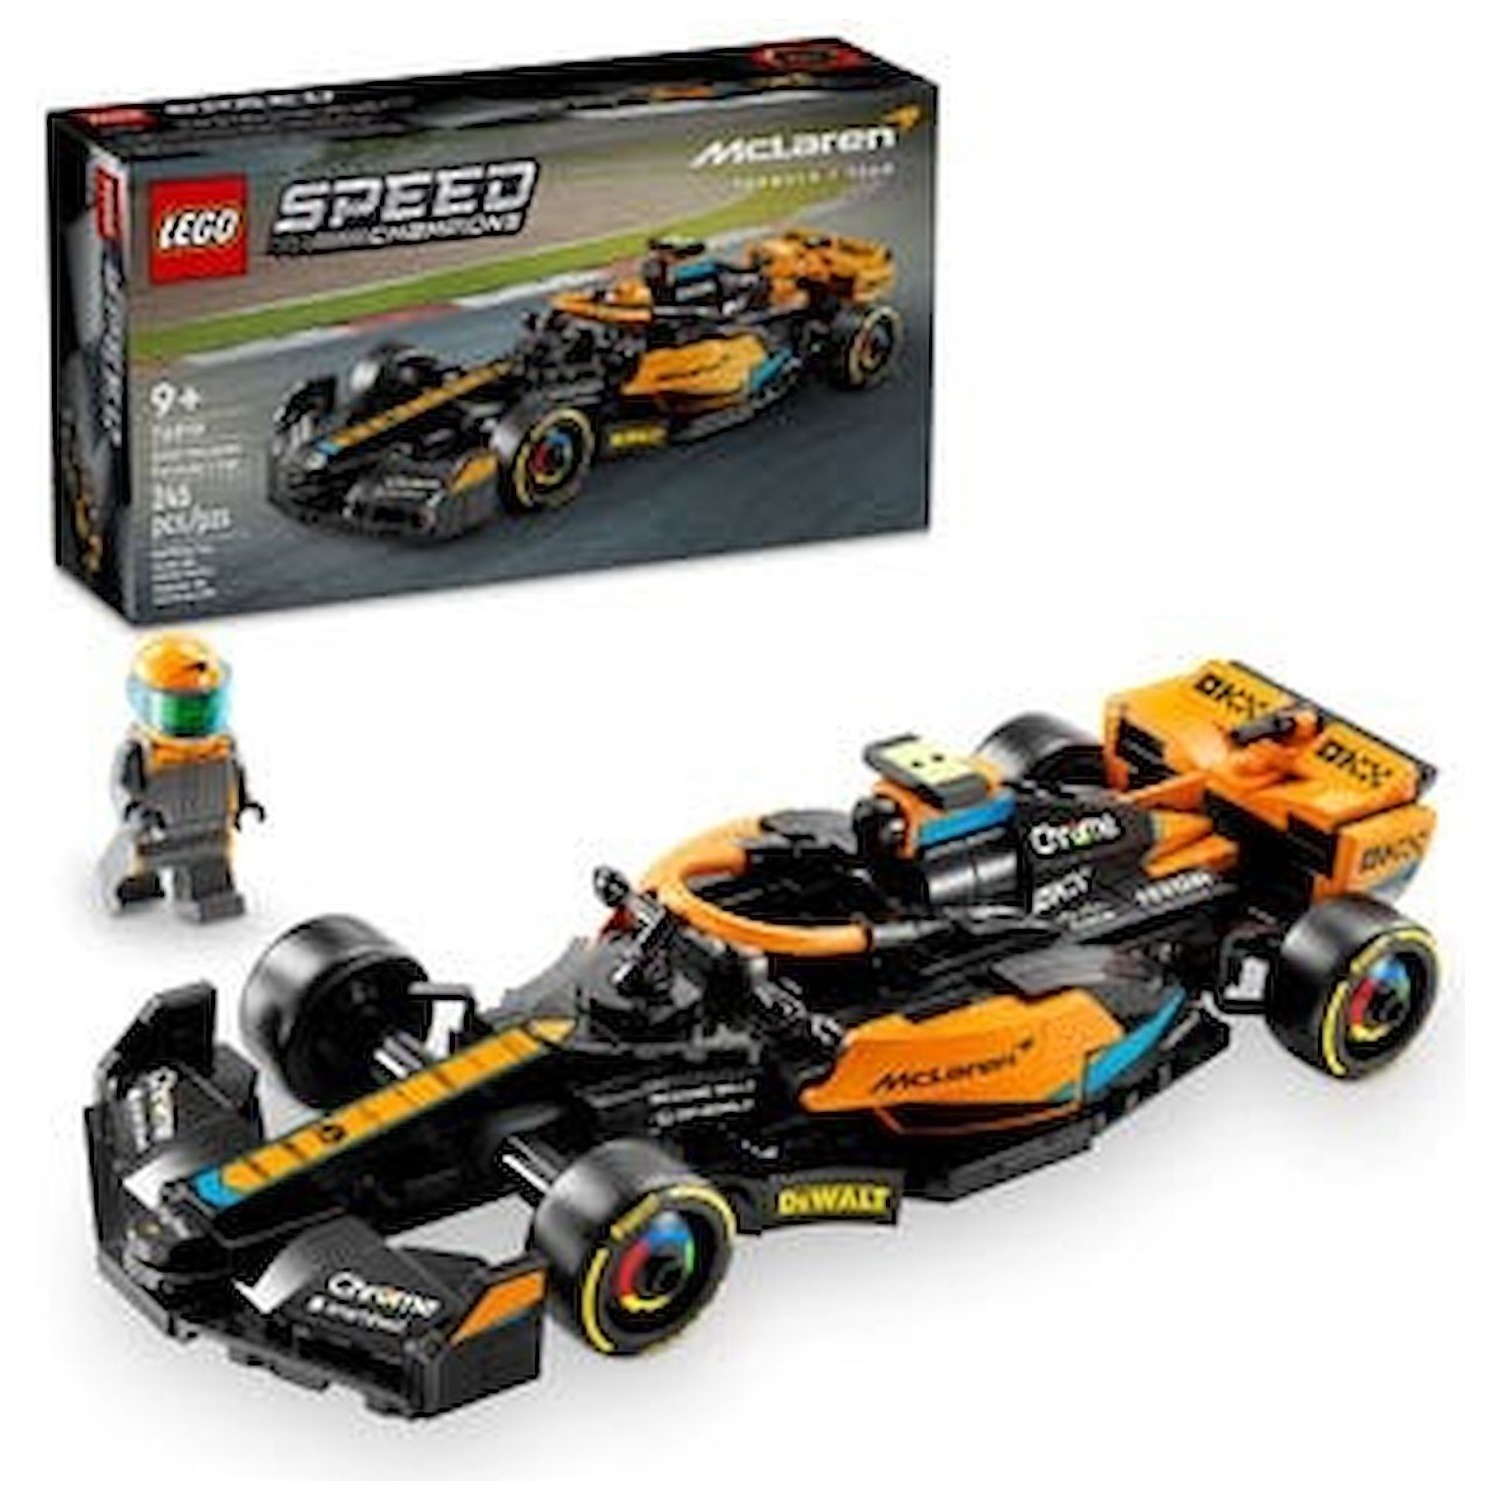 Immagine per Lego Speed McLaren F1 da DIMOStore